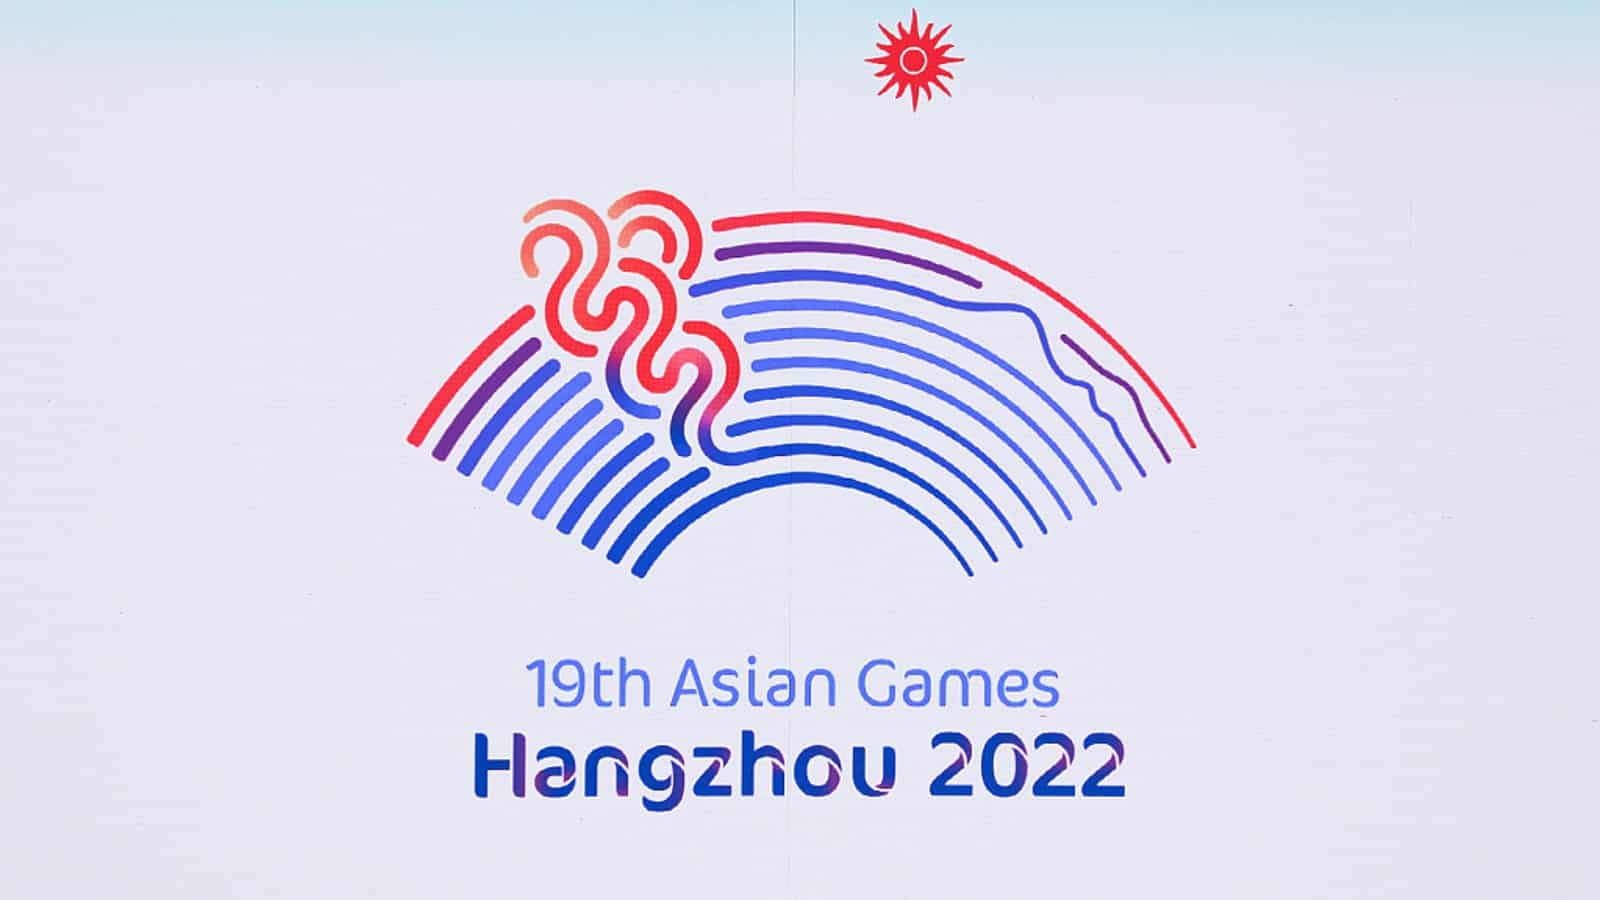 The logo for the 2022 Hangzhou Asian Games